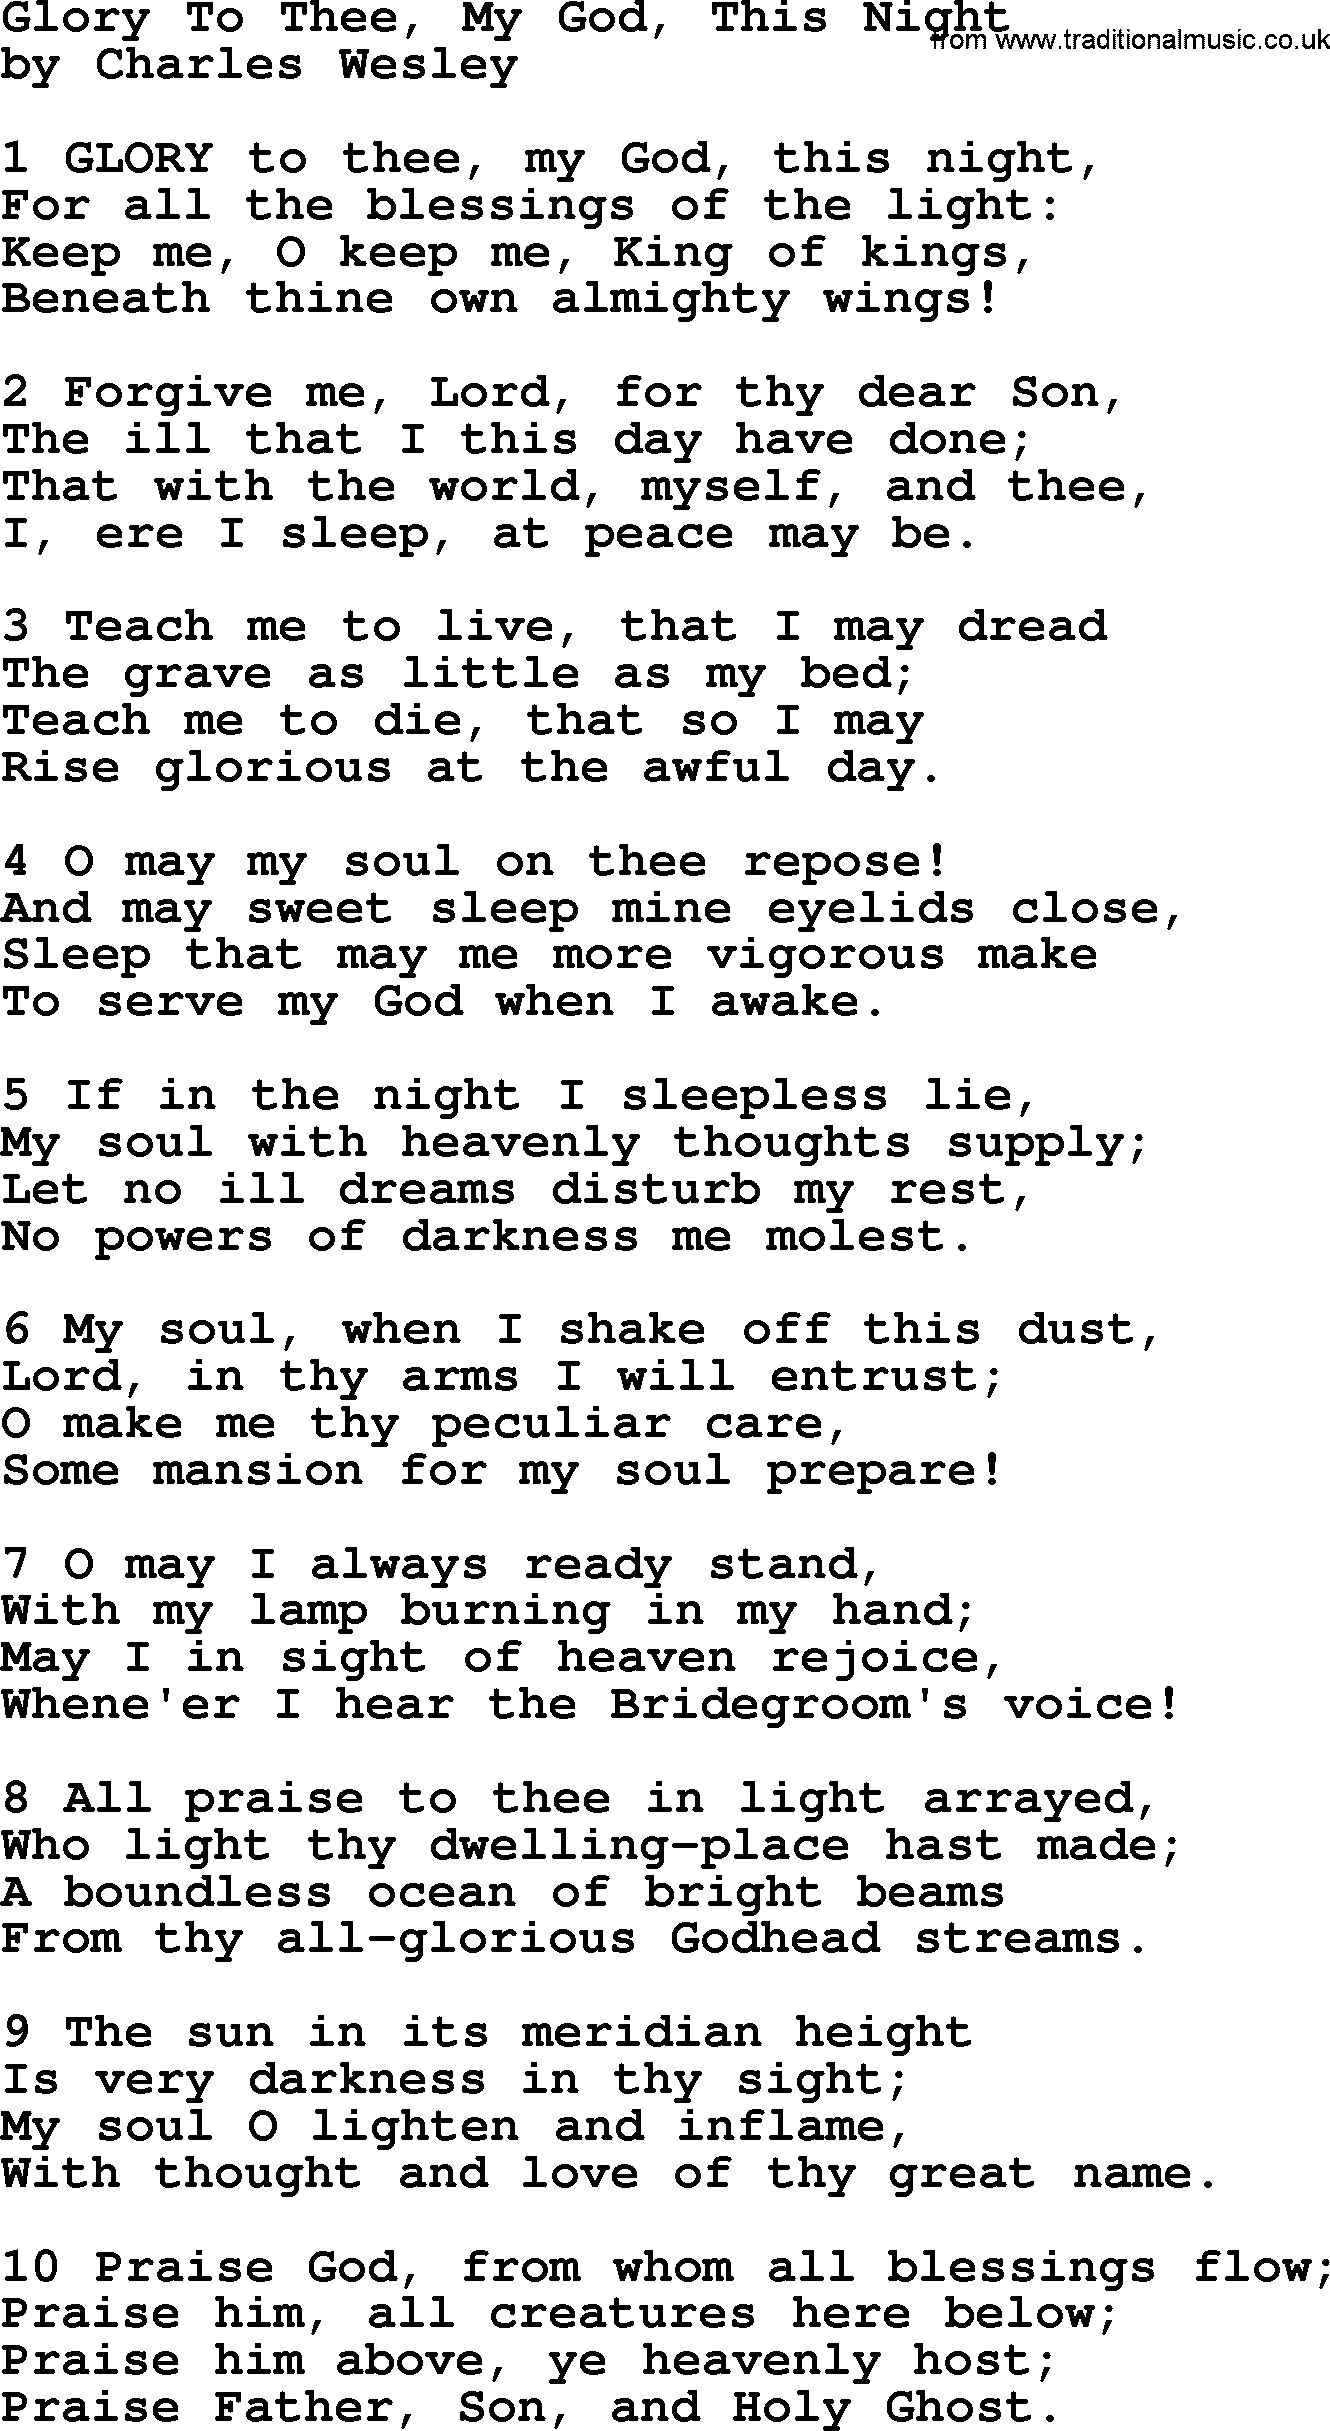 Charles Wesley hymn: Glory To Thee, My God, This Night, lyrics